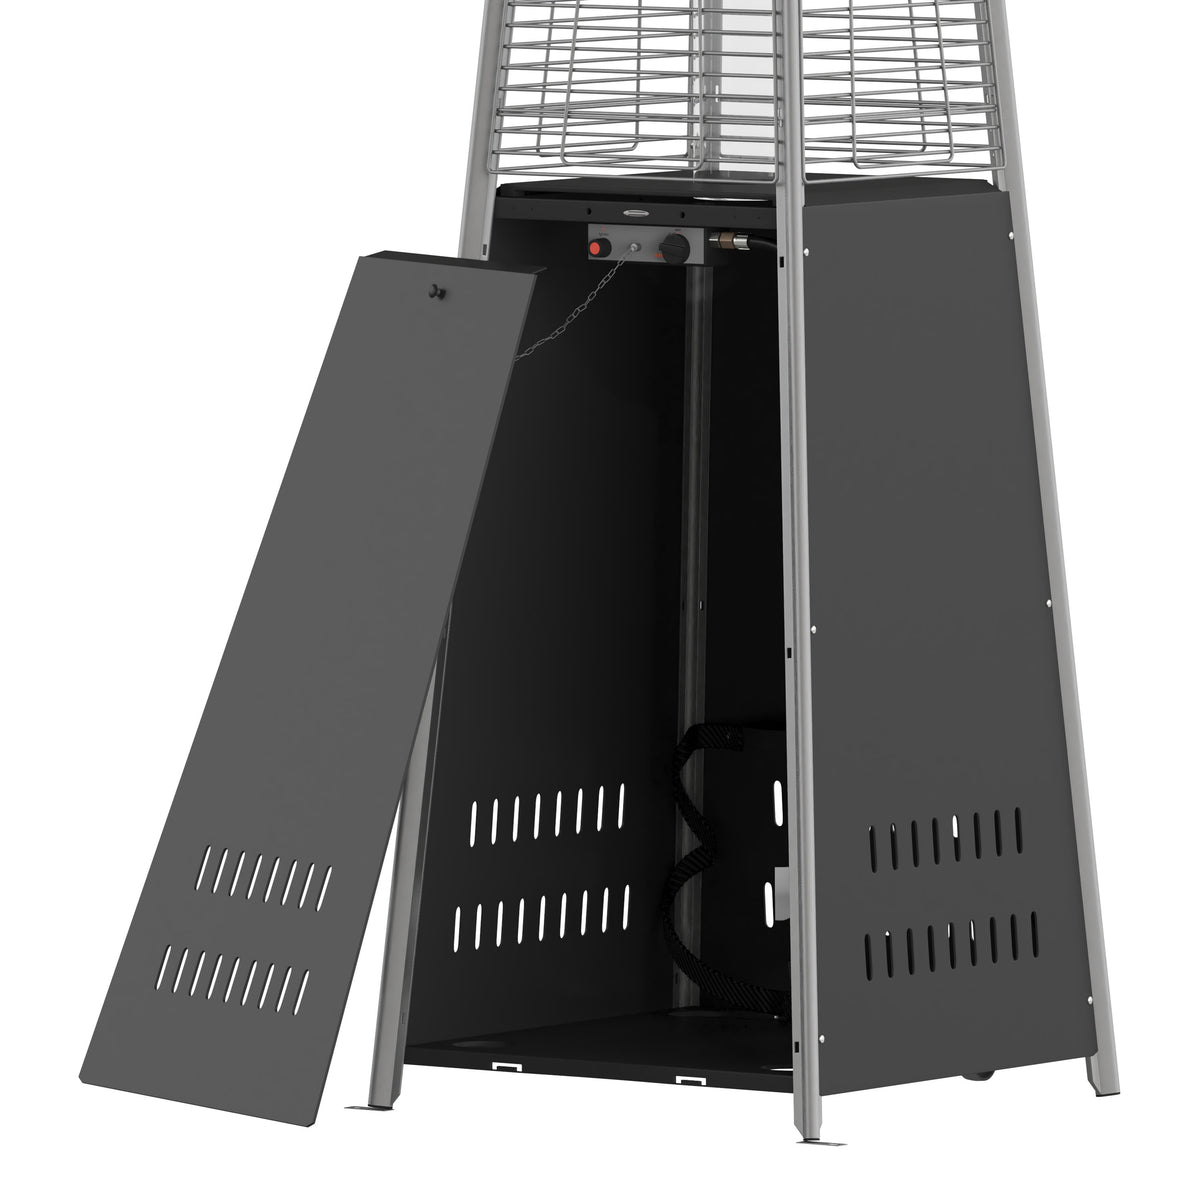 Black |#| Outdoor Patio Heater - Black - 7.5 Feet Round Steel Patio Heater - 42,000 BTU's